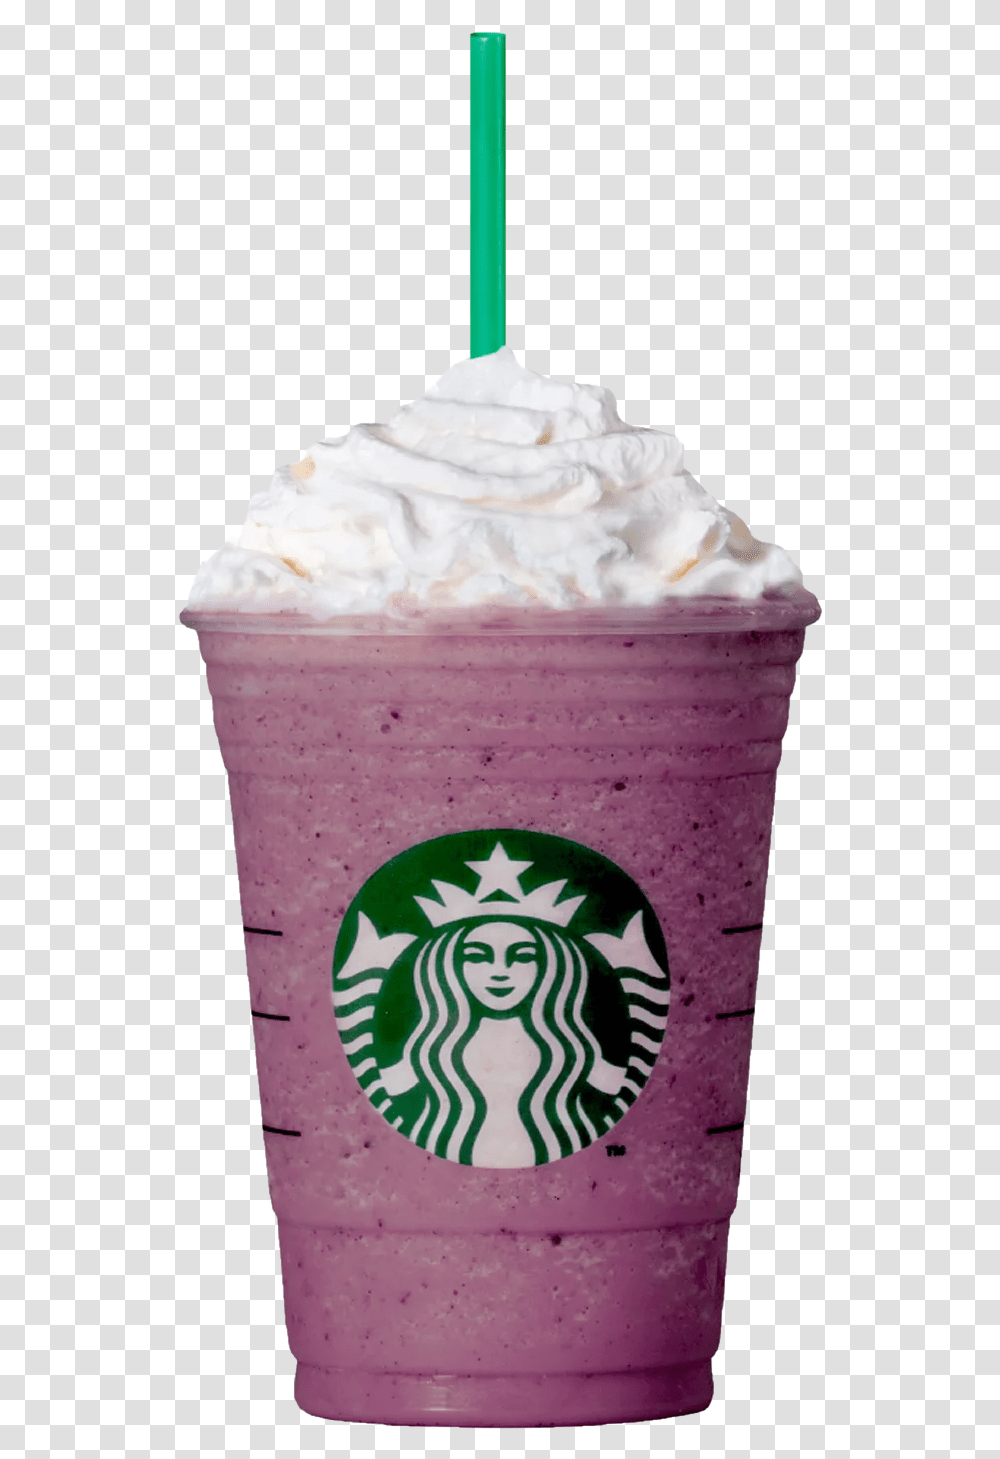 Frappuccino 3 Image Pokemon Go Drink Starbucks, Juice, Beverage, Smoothie, Cream Transparent Png